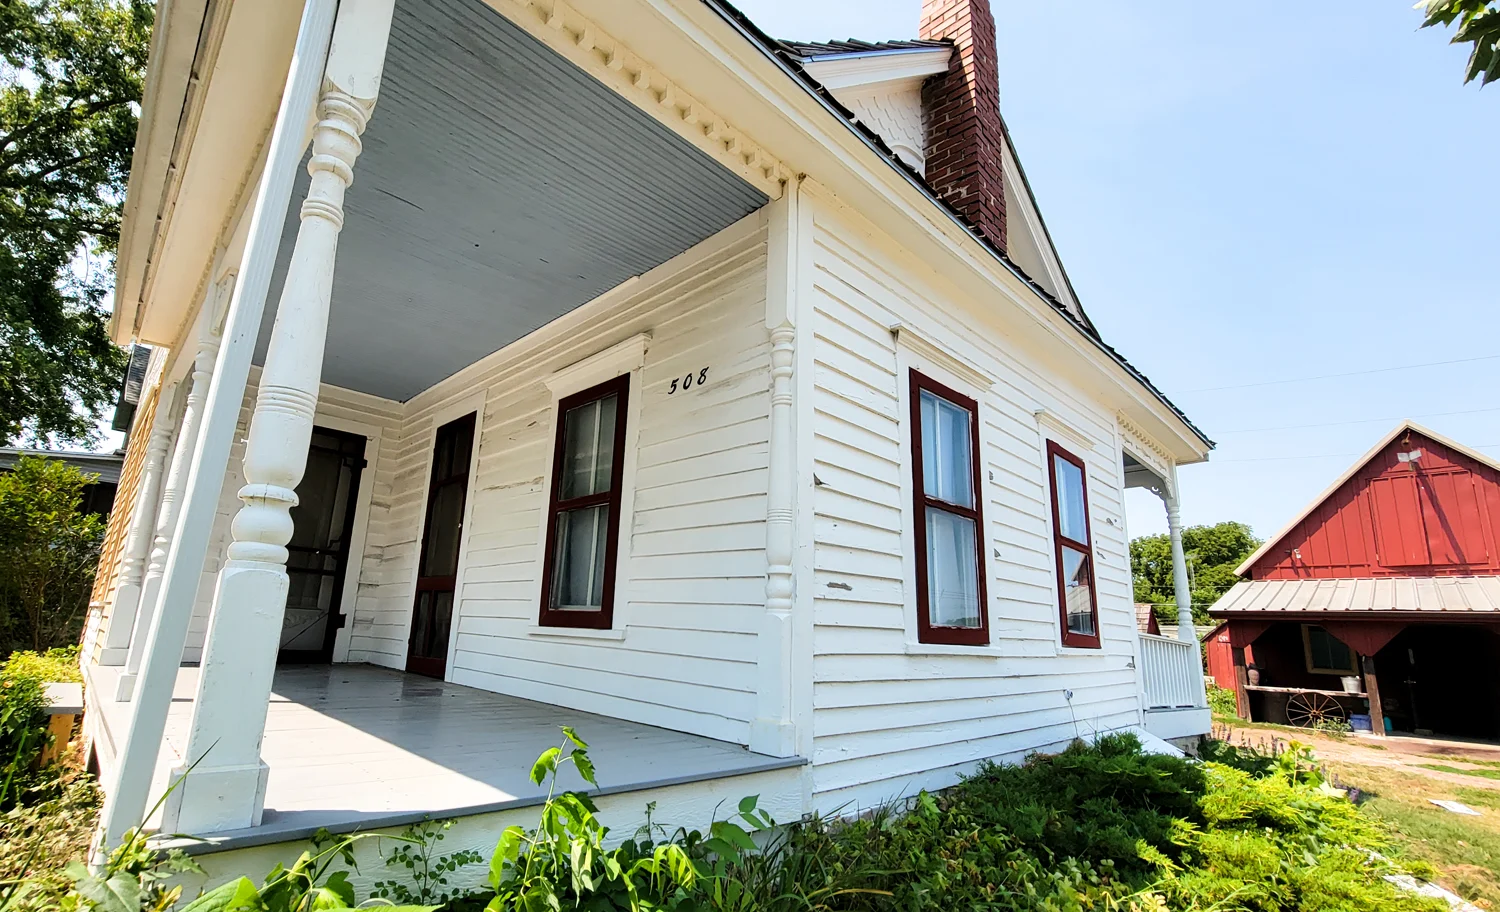 Villisca Iowa House where Ax Murders Took Place 